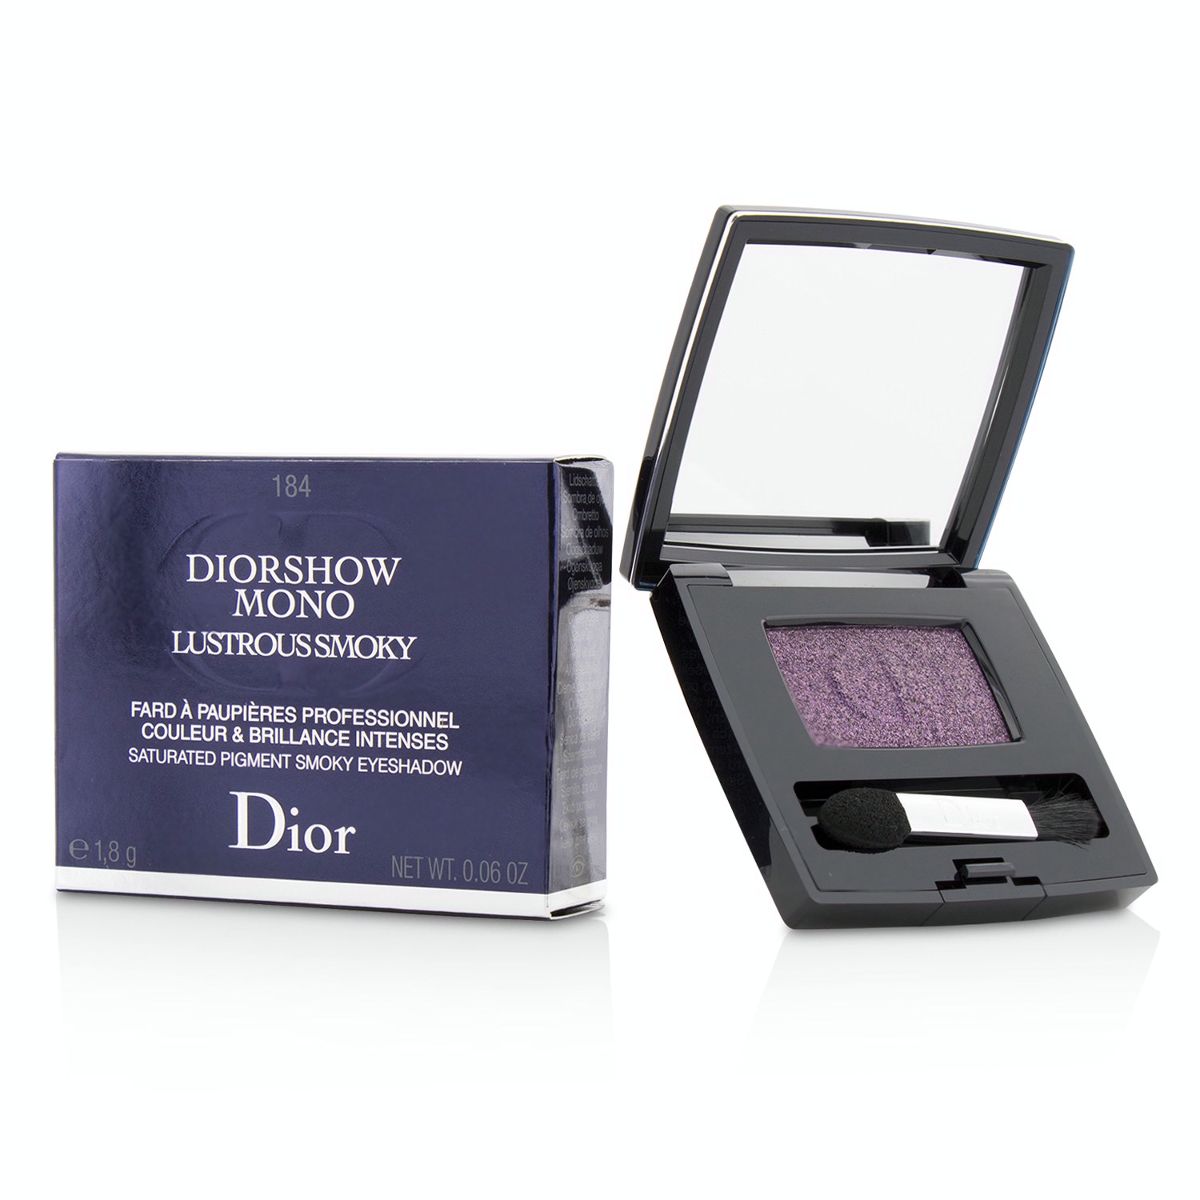 Diorshow Mono Lustrous Smoky Saturated Pigment Smoky Eyeshadow - # 184 Temptation Christian Dior Image